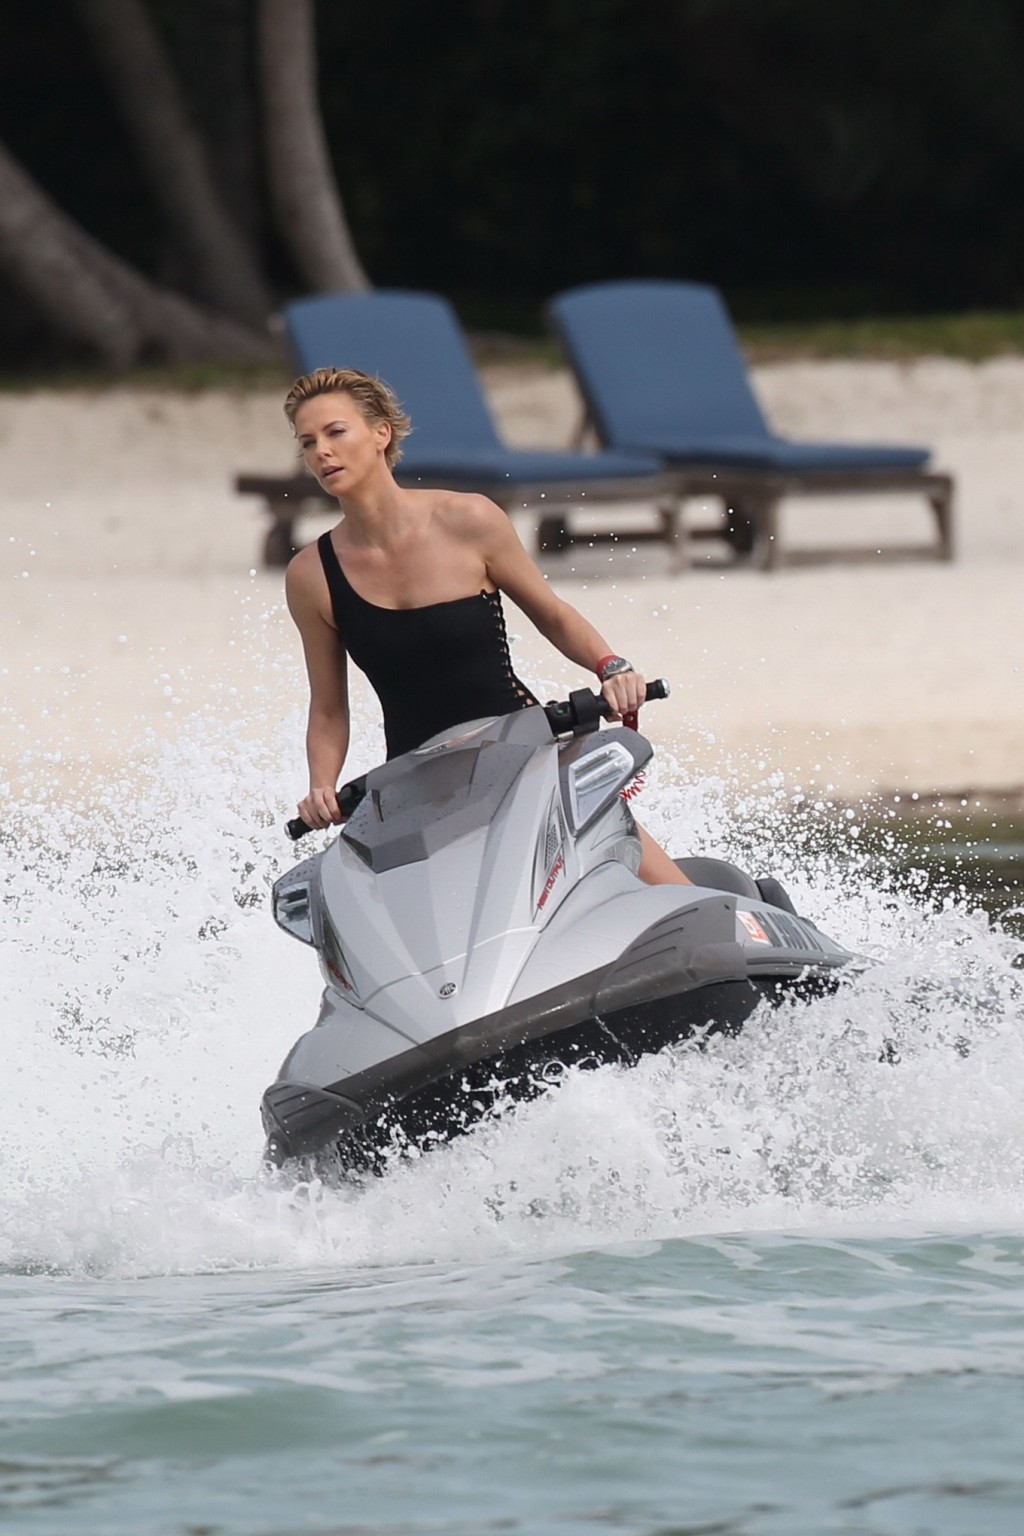 Charlize theron jet skiing in schwarzem monokini während des photoshoot in miami beac
 #75201215